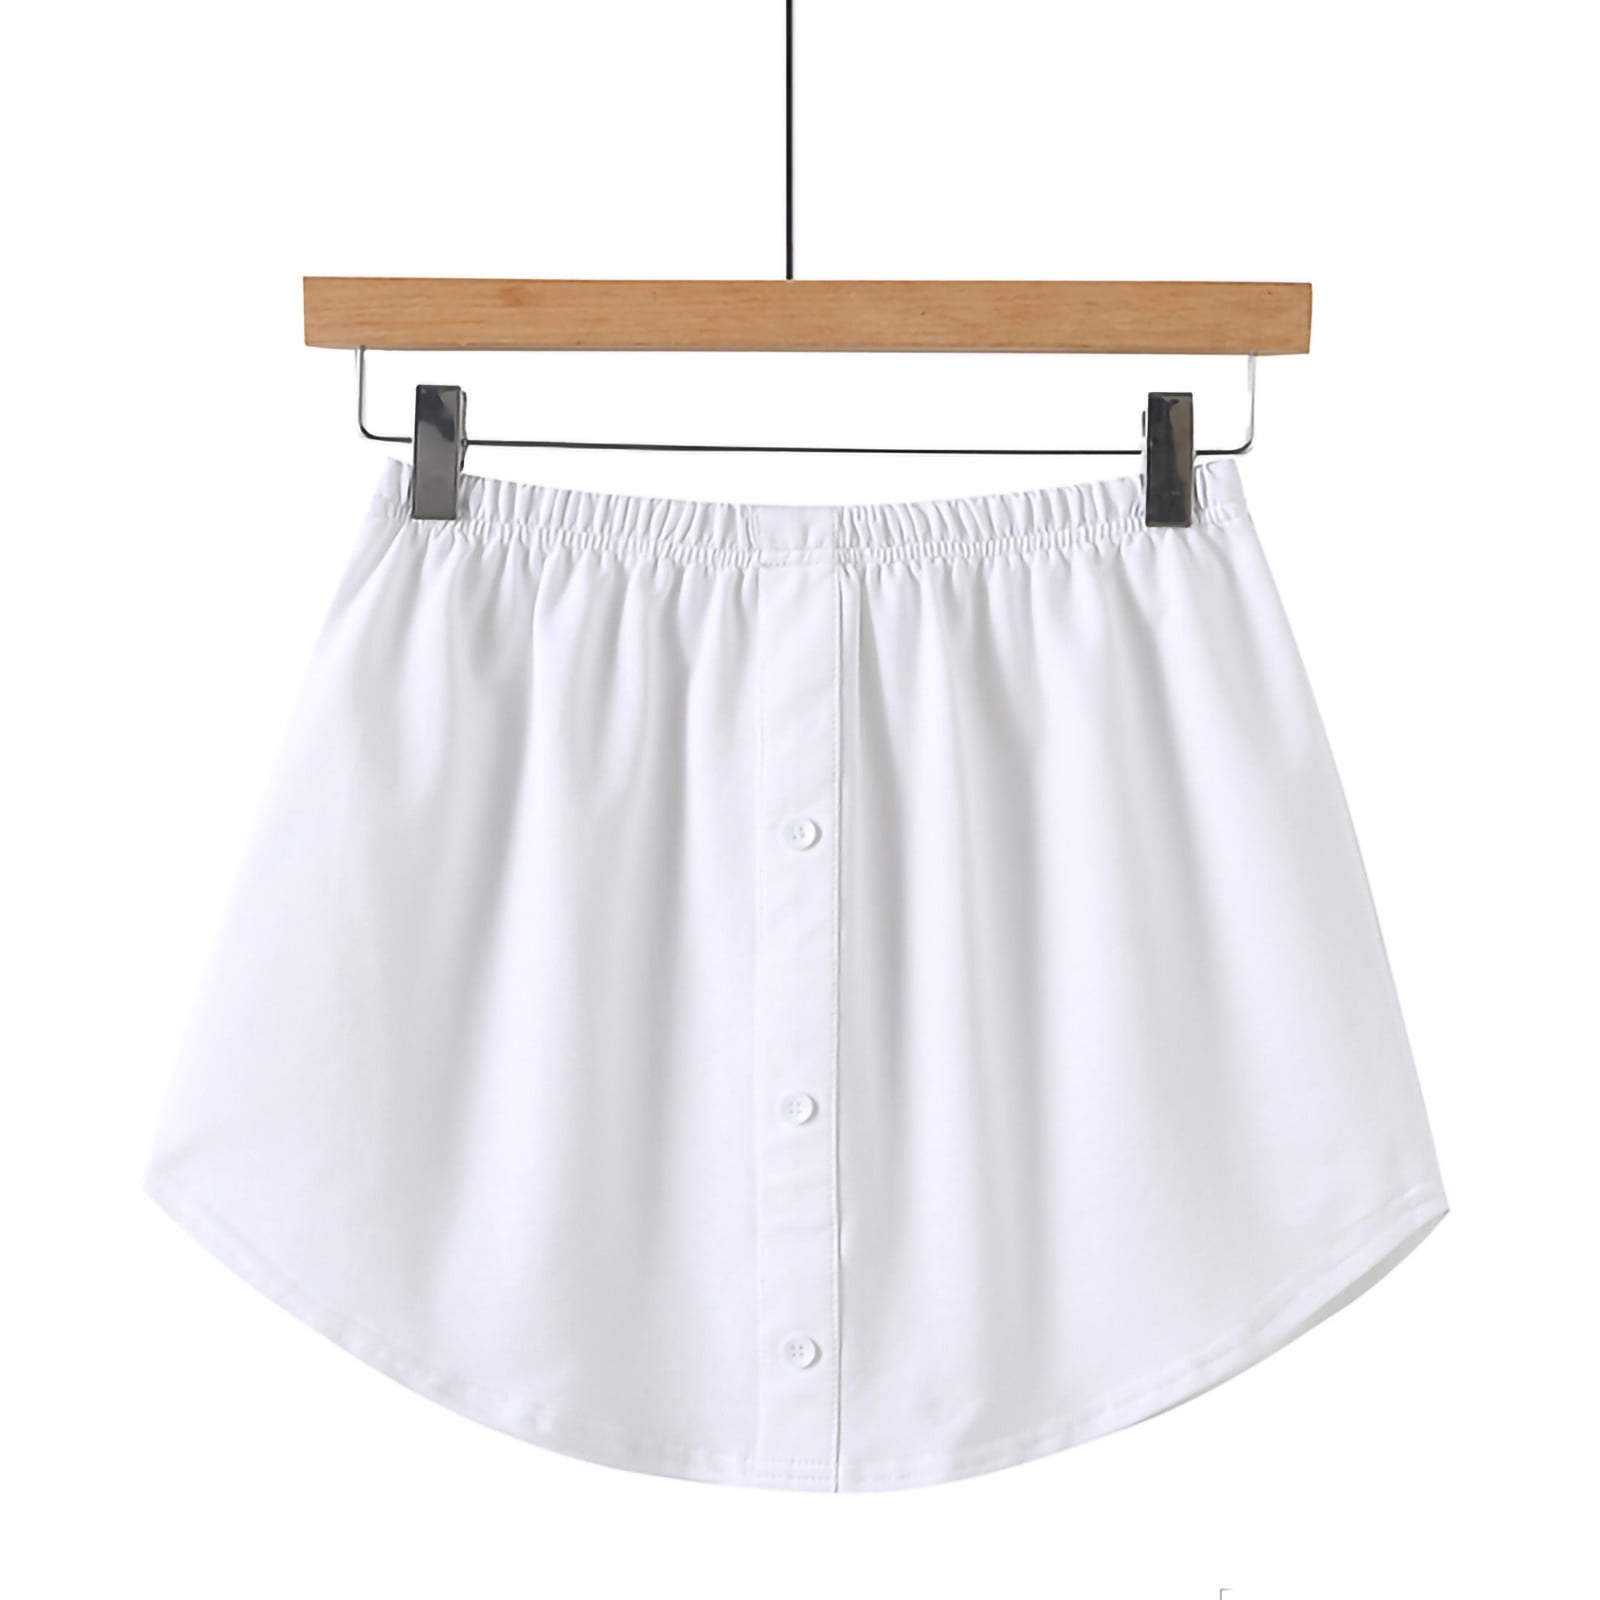 Geyoga Shirt Extender for Women 3 Pcs Adjustable Fake Layering Leggings Top  Lower Sweep Shirt Undershirt Skirt (Denim Blue, Size